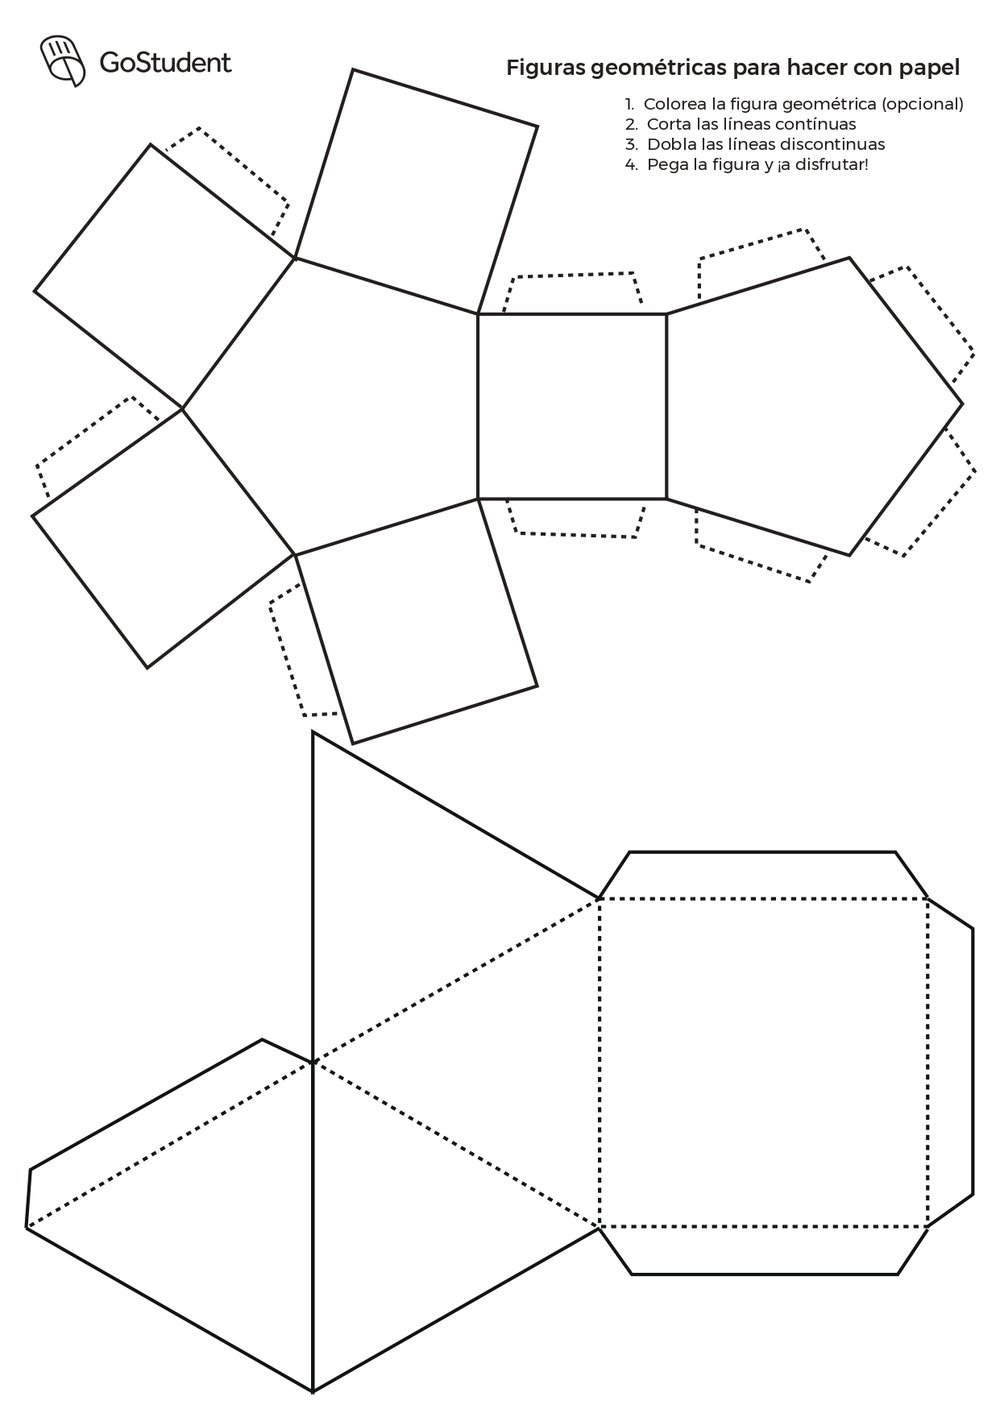 PDF: Cómo geométricas de papel en | GoStudent